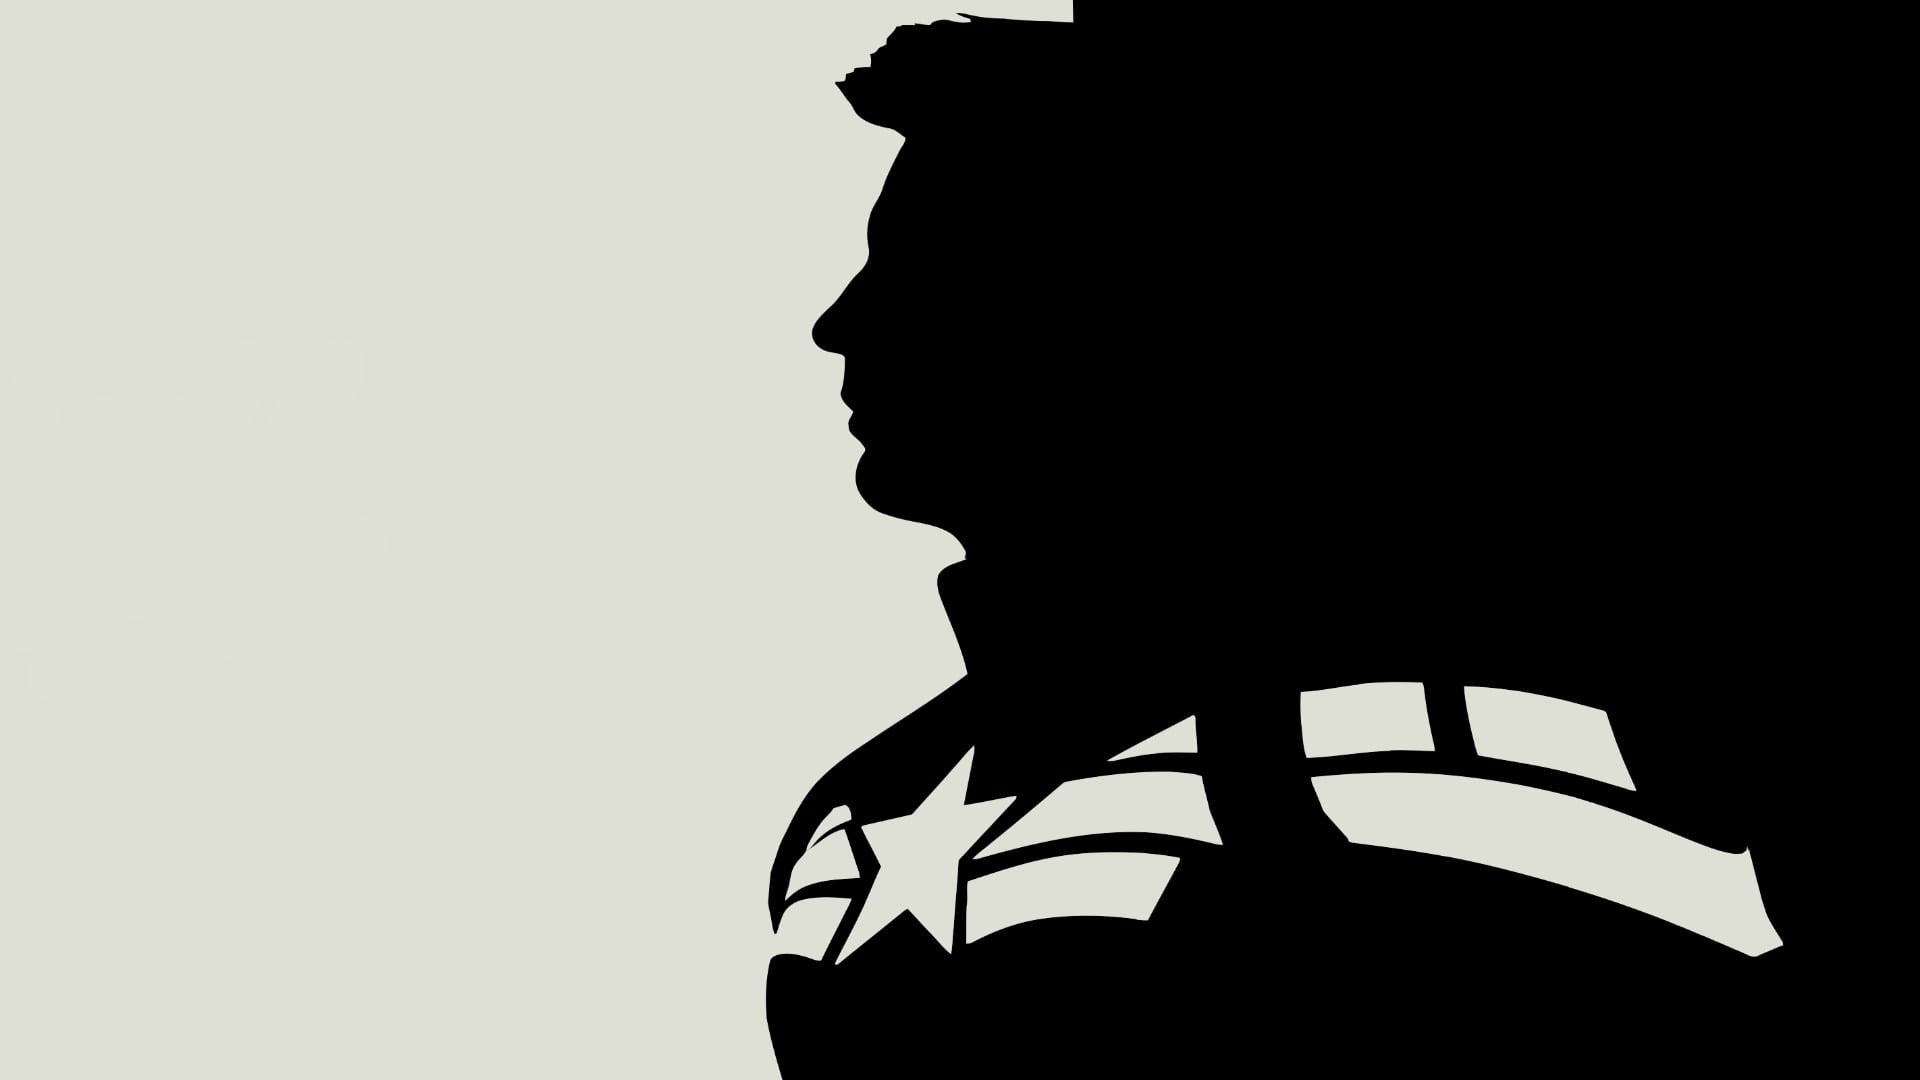 Captain America wallpaper, Captain America: The Winter Soldier